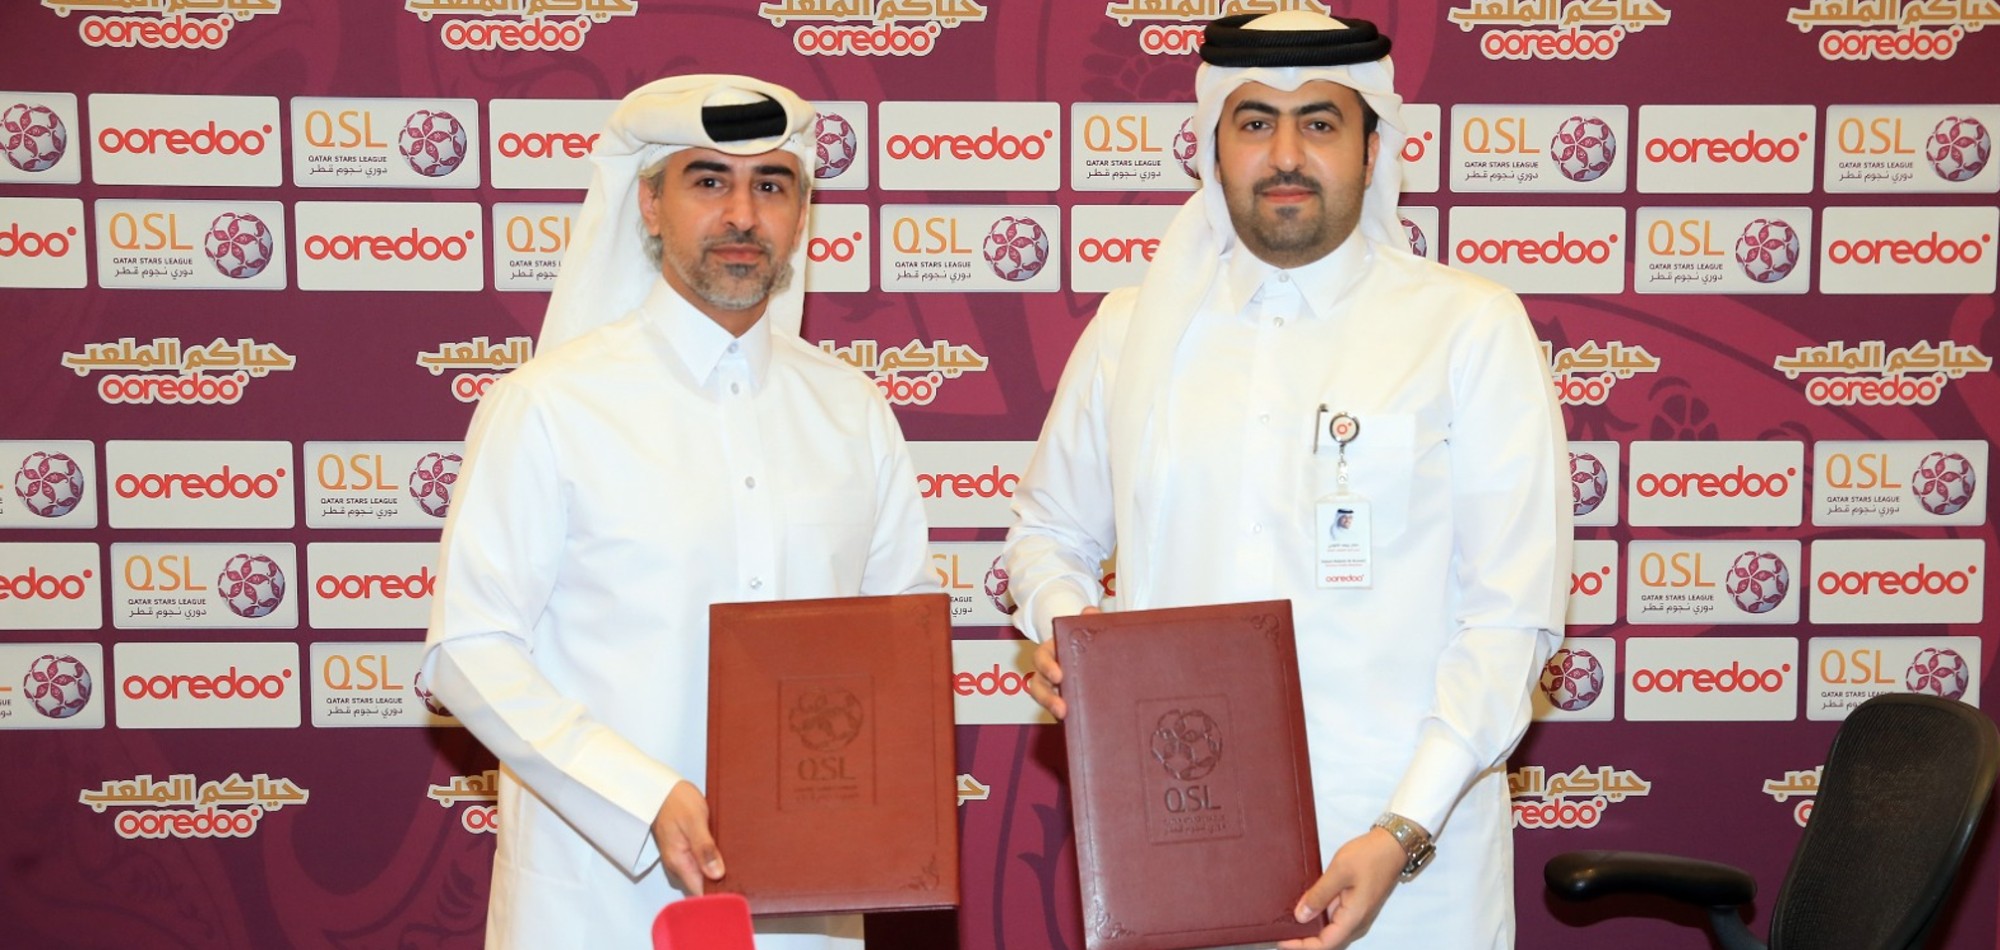 Qatar Stars League and Ooredoo launch #WelcomeToTheStadium initiative